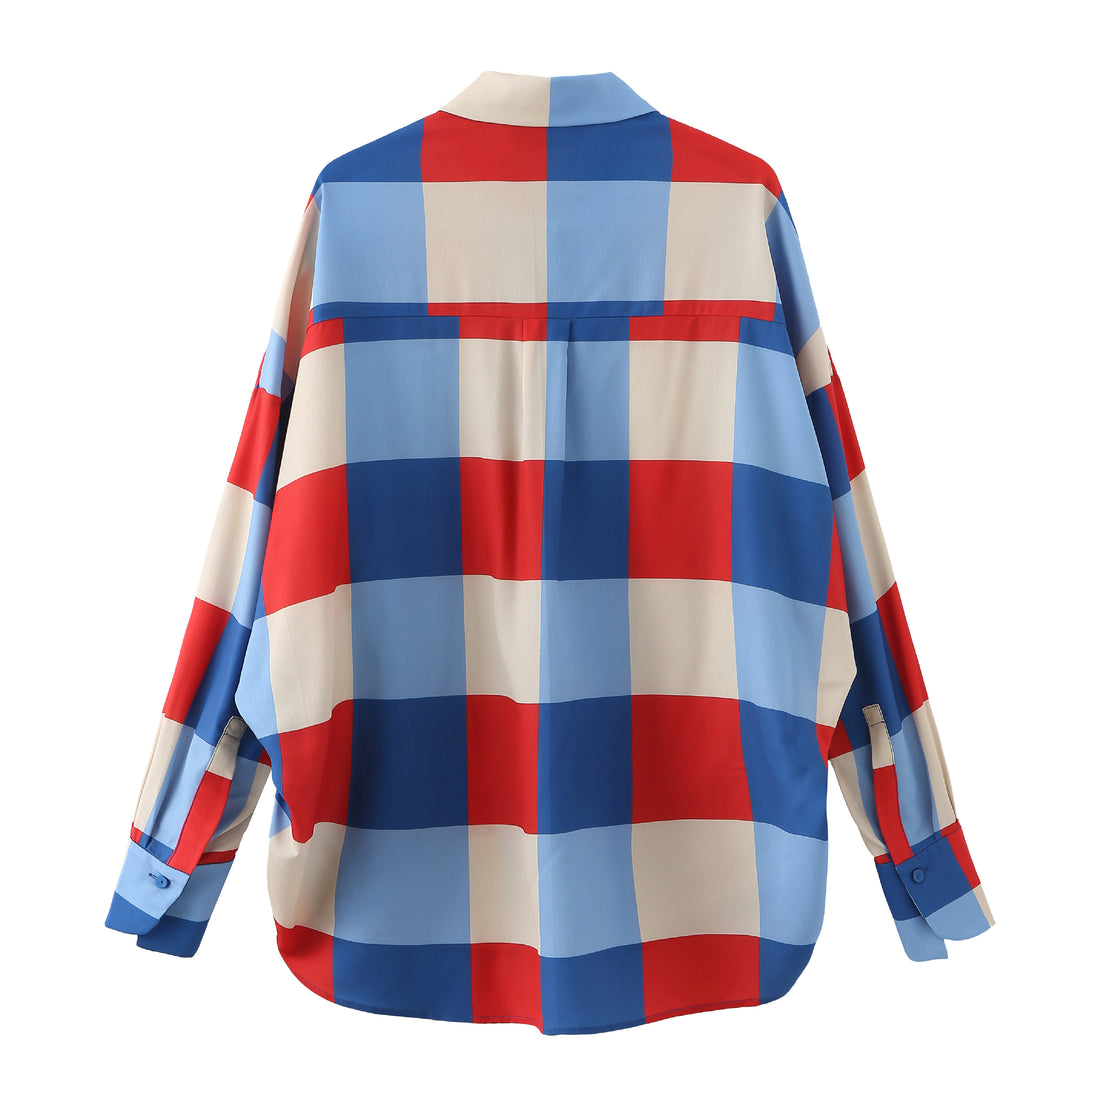 Secka / Checkered Loose Fit Capri Shirt • Red